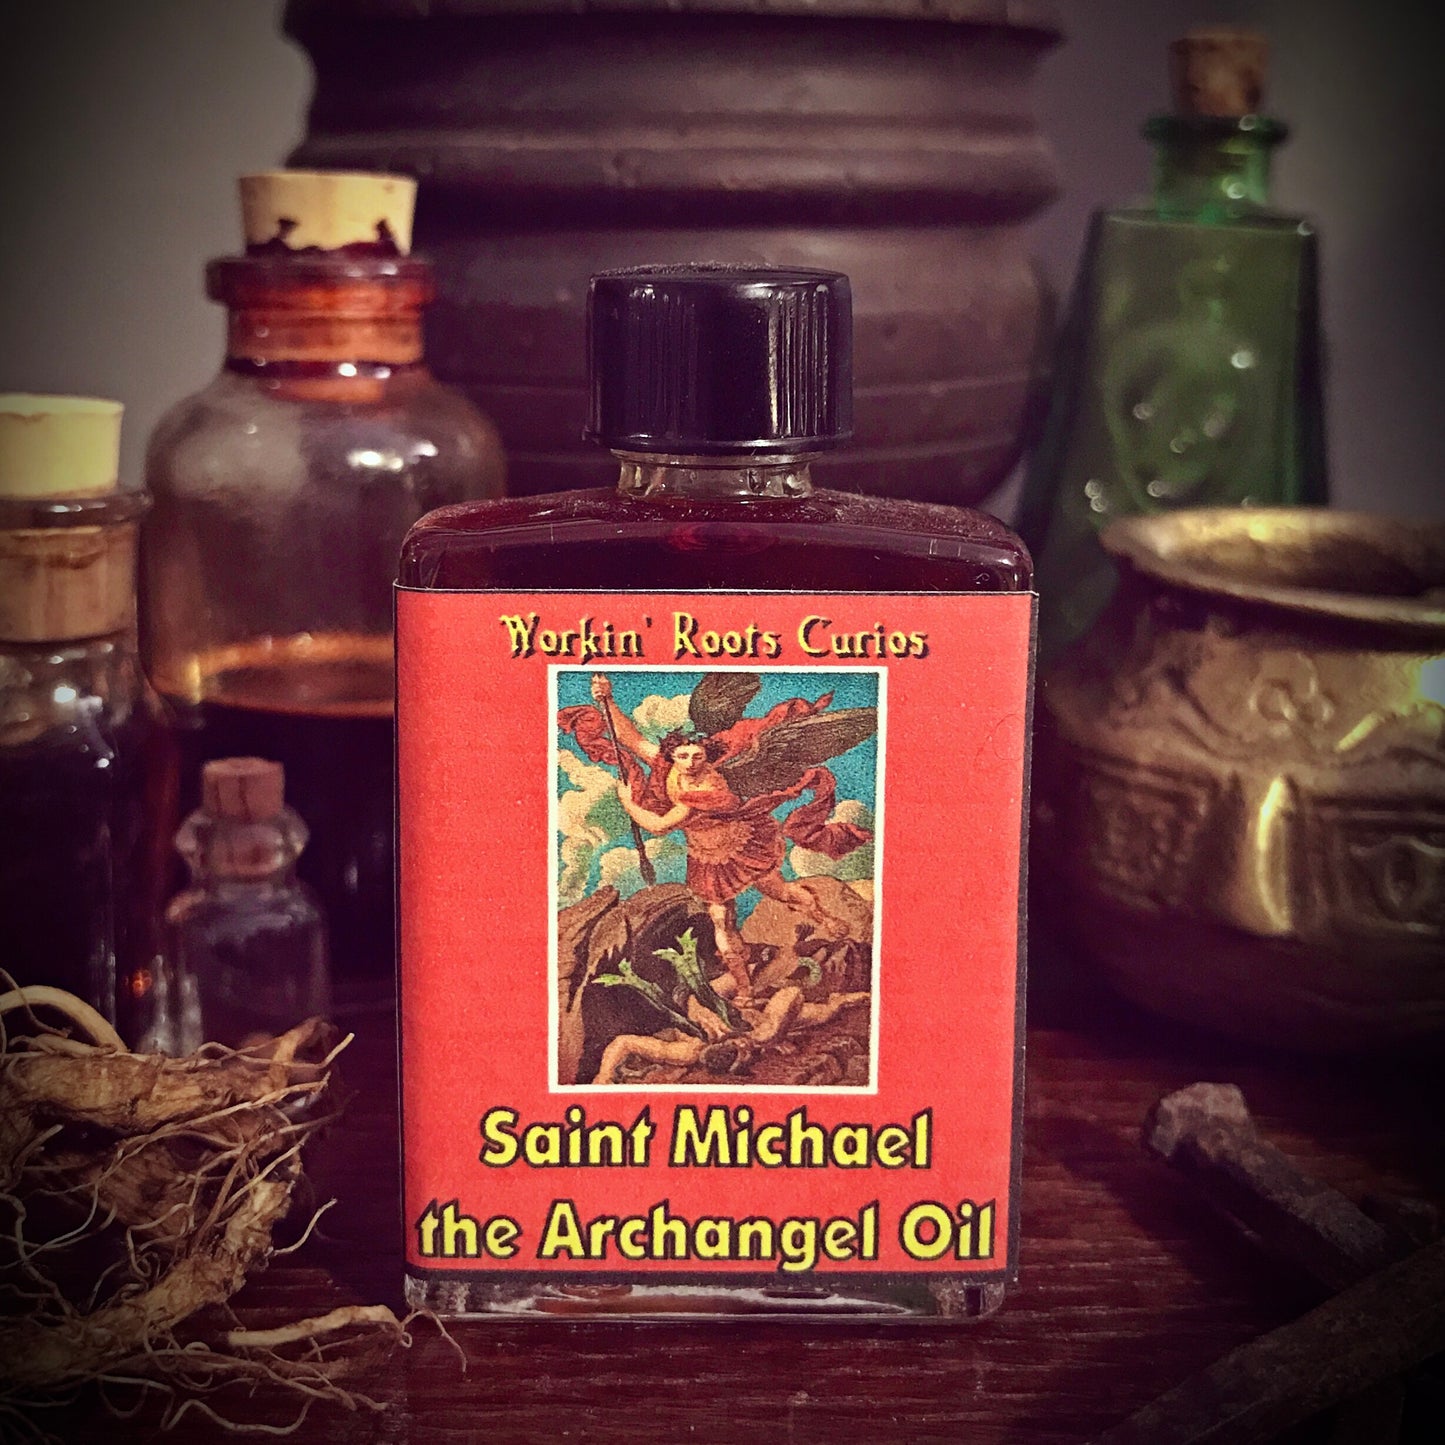 St. Michael the Archangel Oil